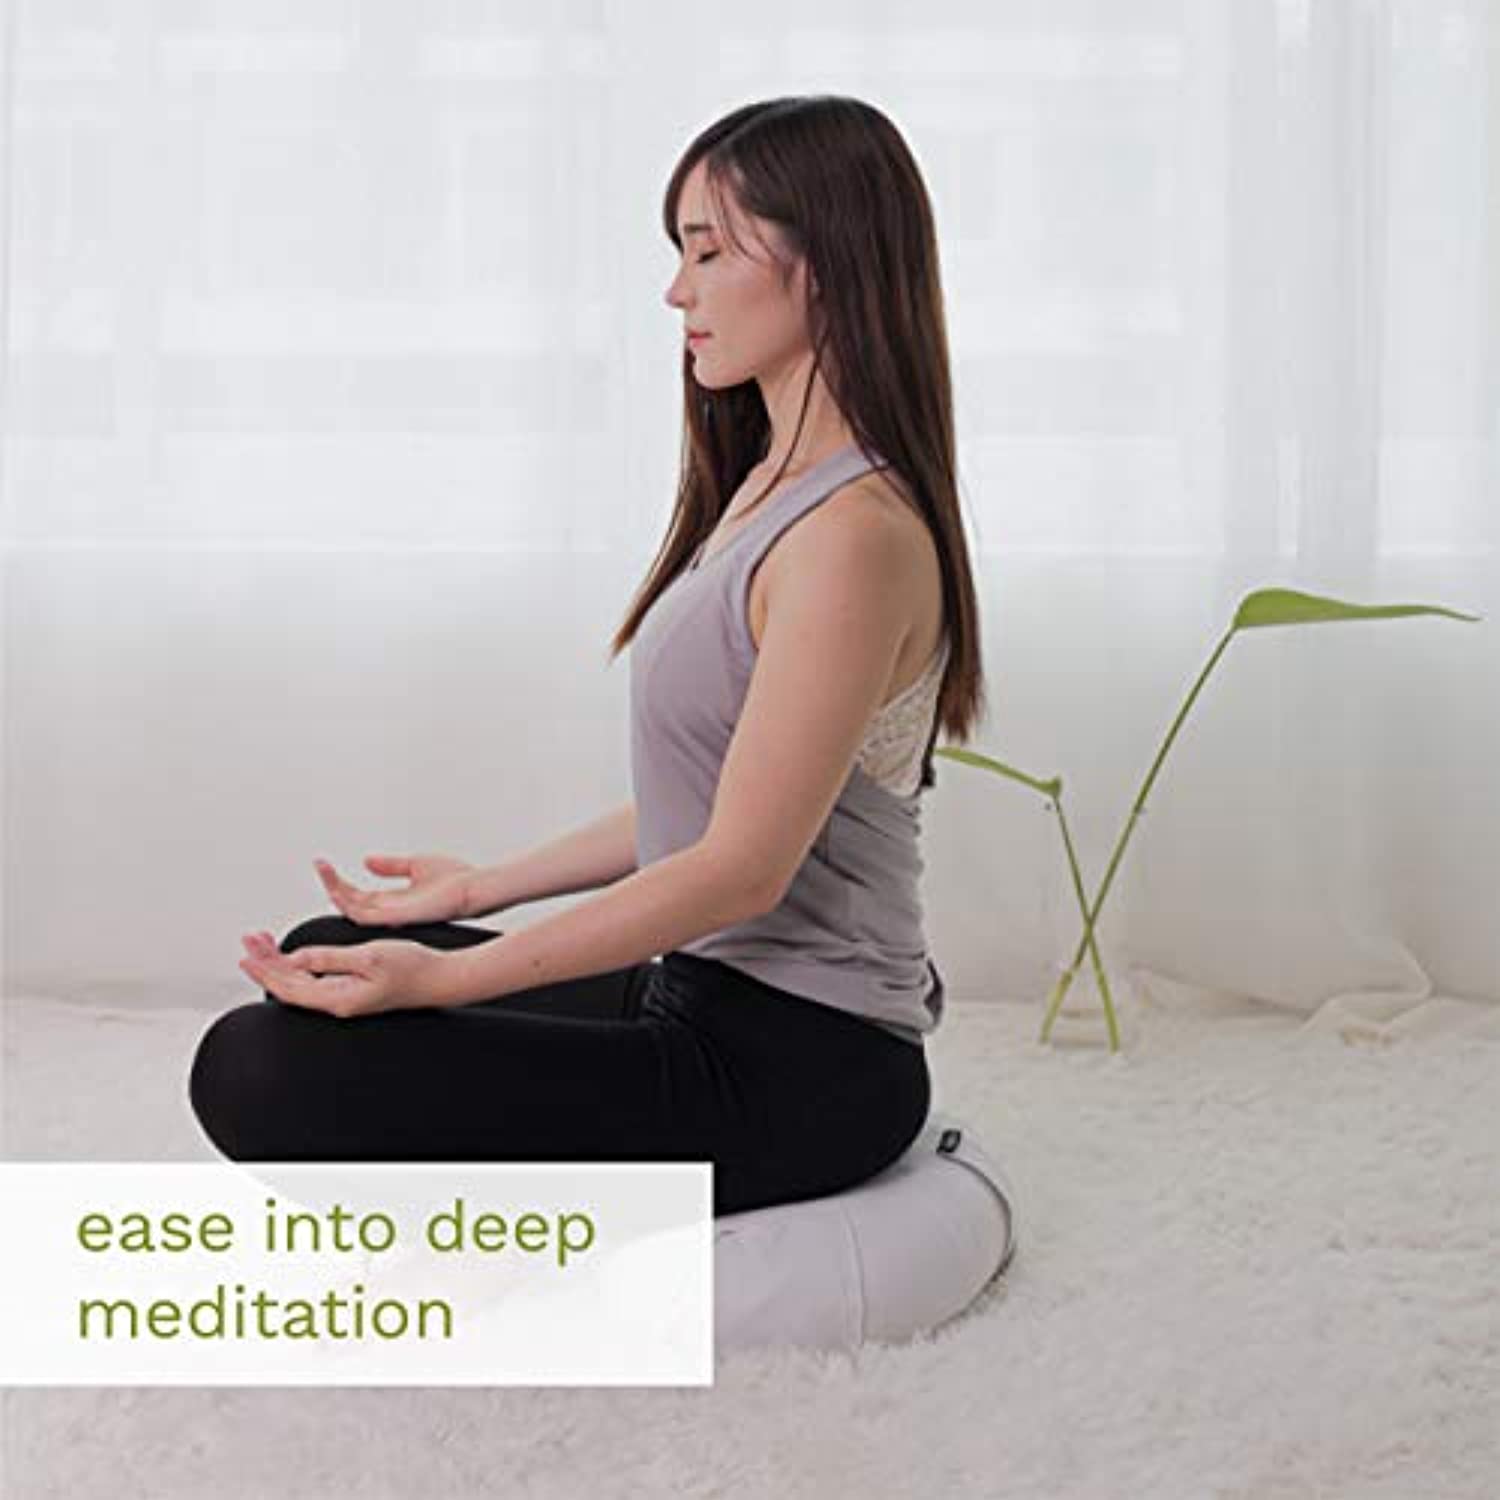 Mindful & Modern - Cojín de meditación grande